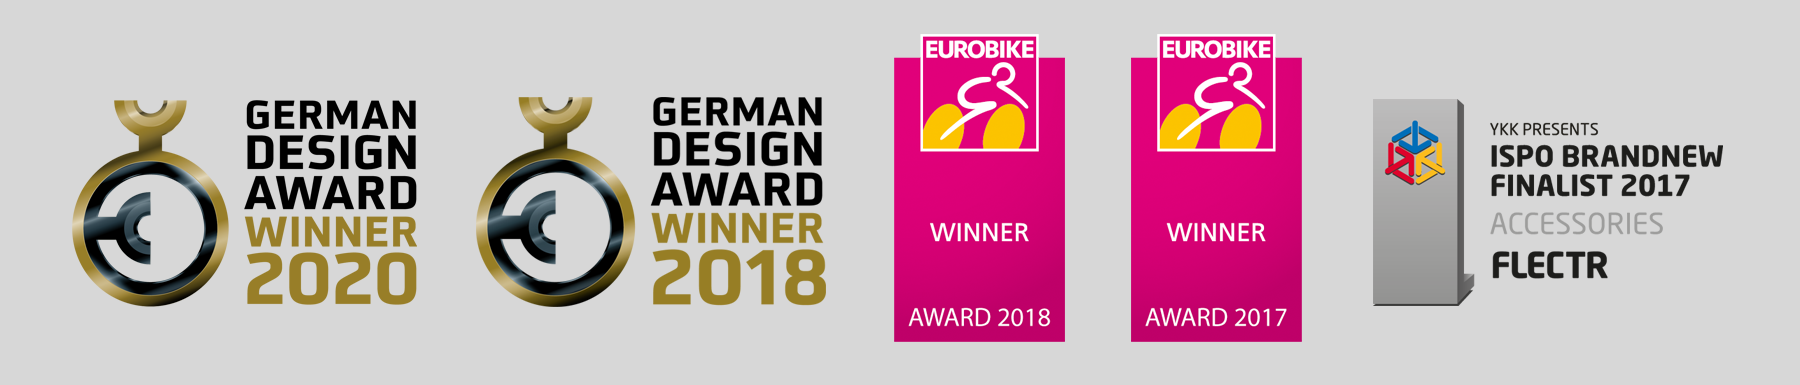 FLECTR BIKE - German Design Award Winner 2020 - German Design Award Winner 2018 - EUROBIKE AWARD WINNER 2018 - ISPO BRAND-NEW AWARD 2017 - EUROBIKE AWARD WINNER 2017